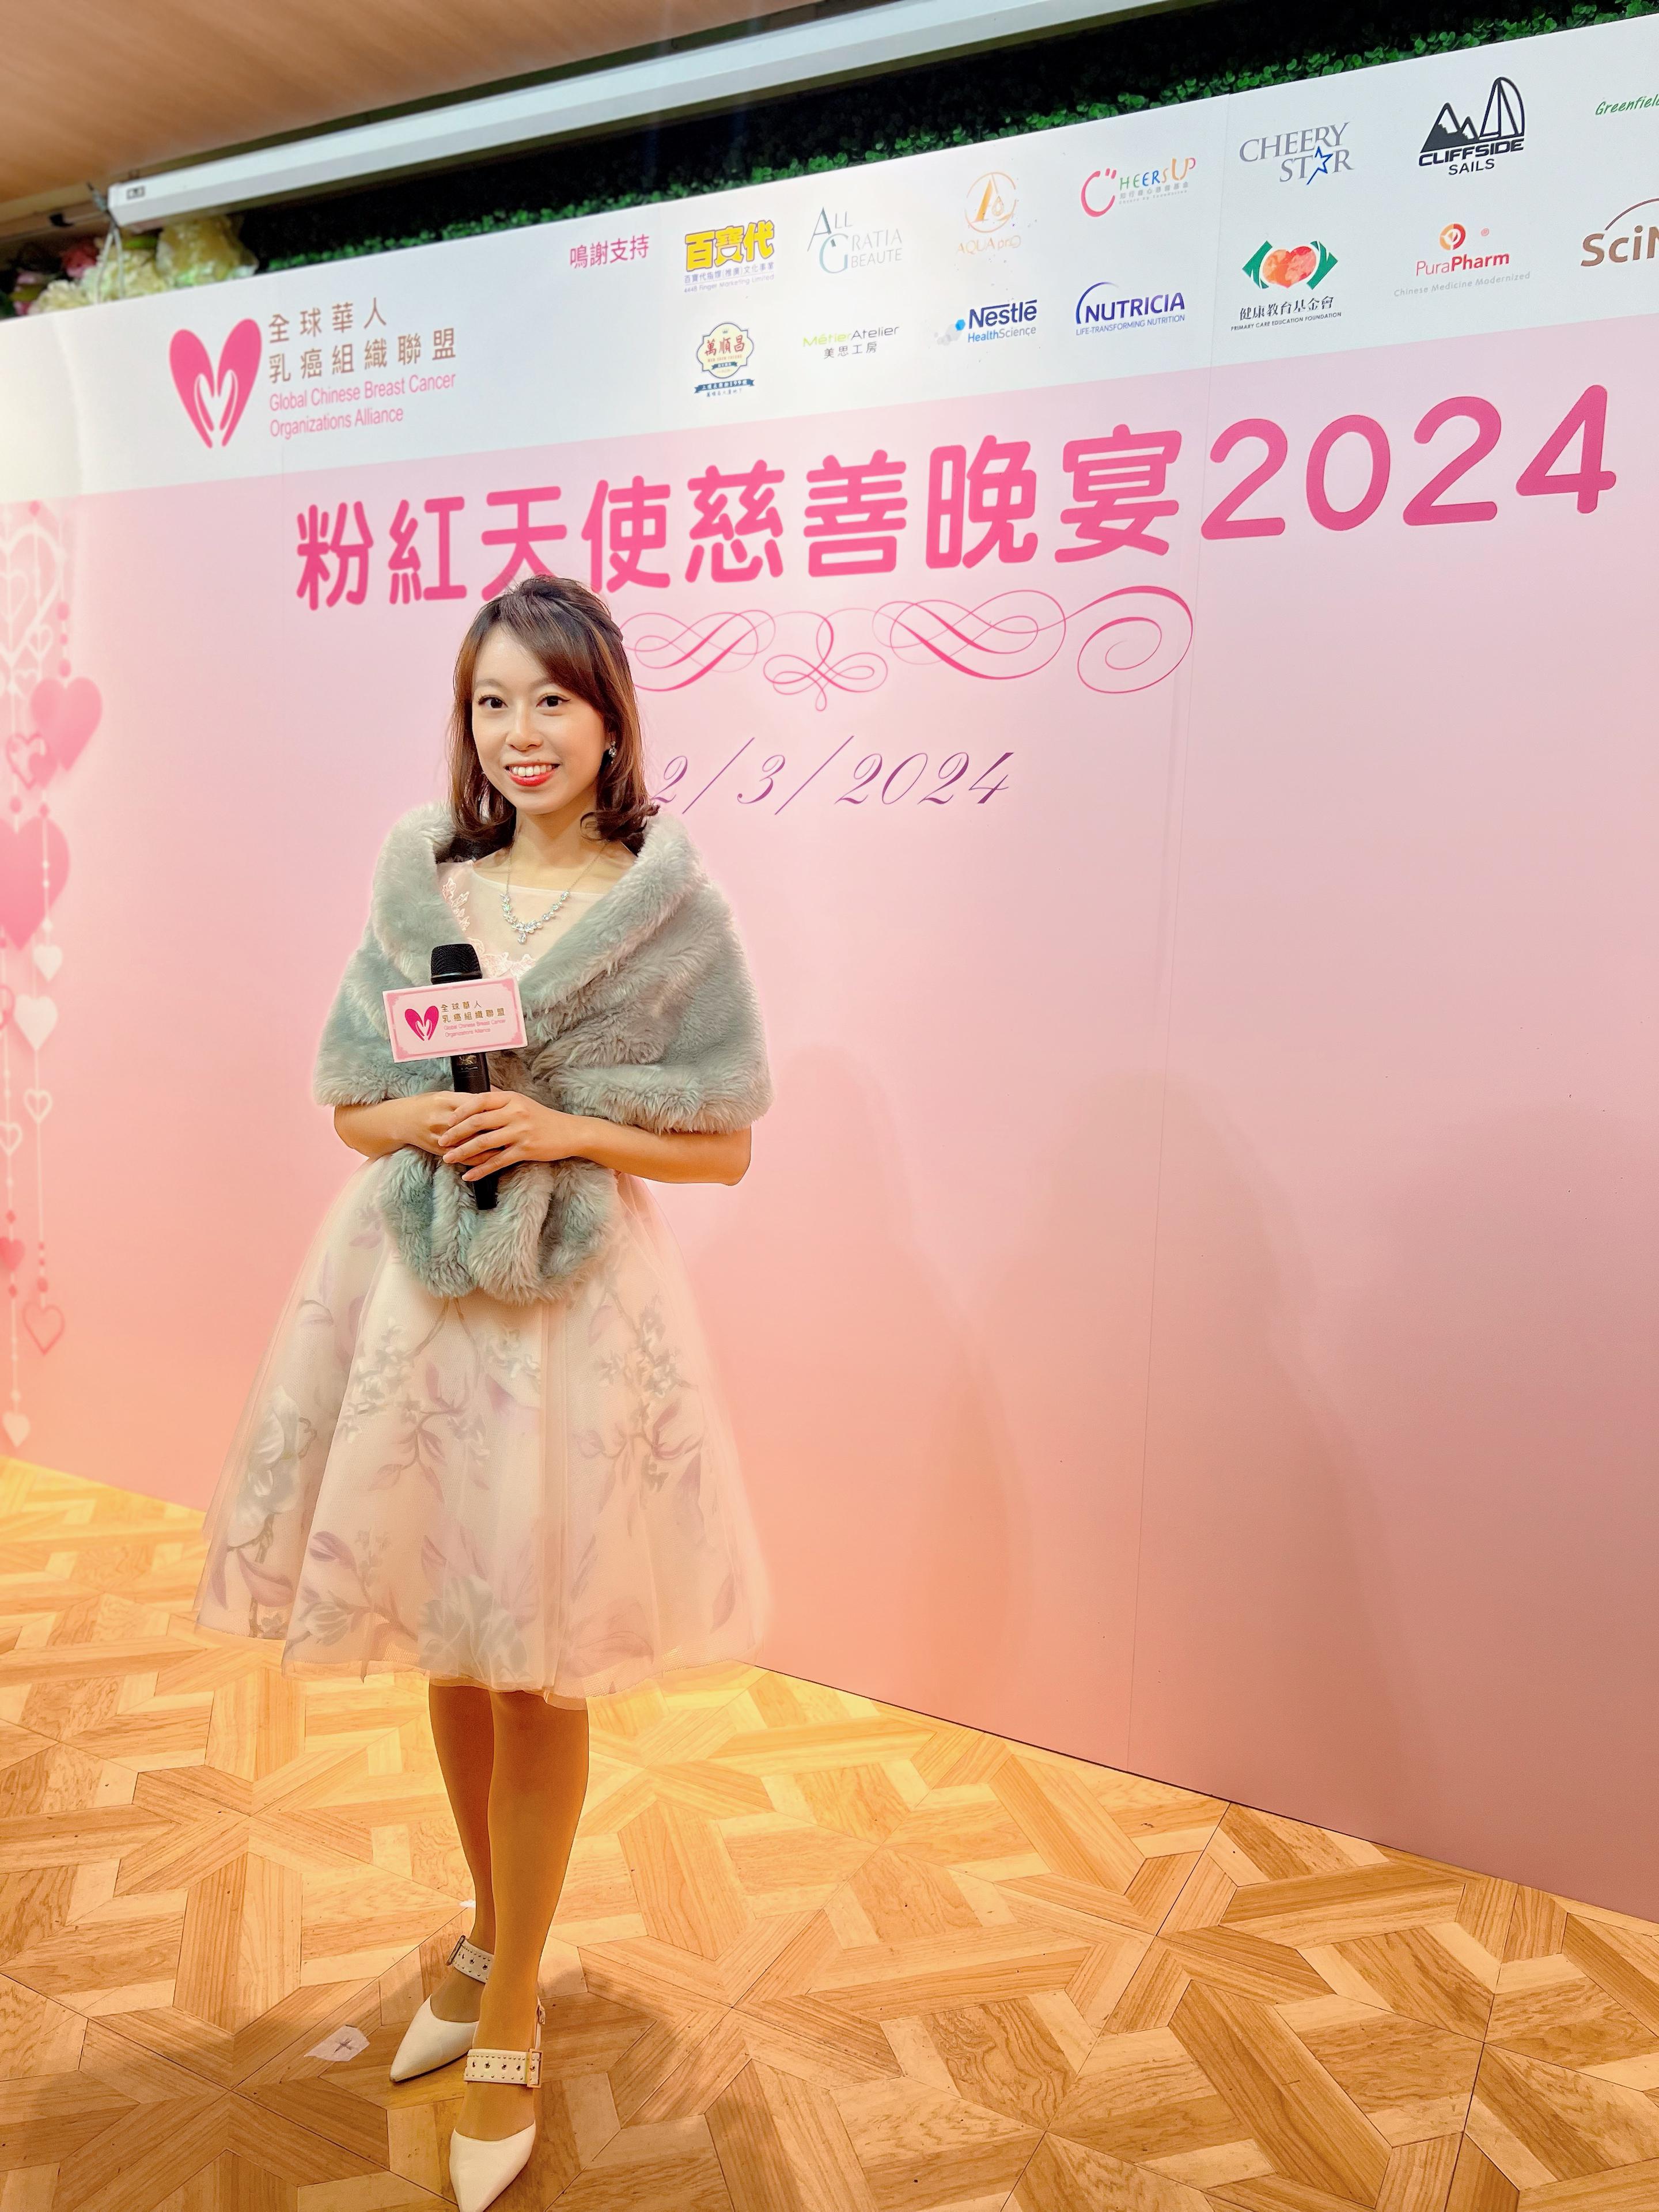 VIVIAN 曾子晴司儀工作紀錄: 全球華人乳癌組織聯盟粉紅天使慈善晚宴主持